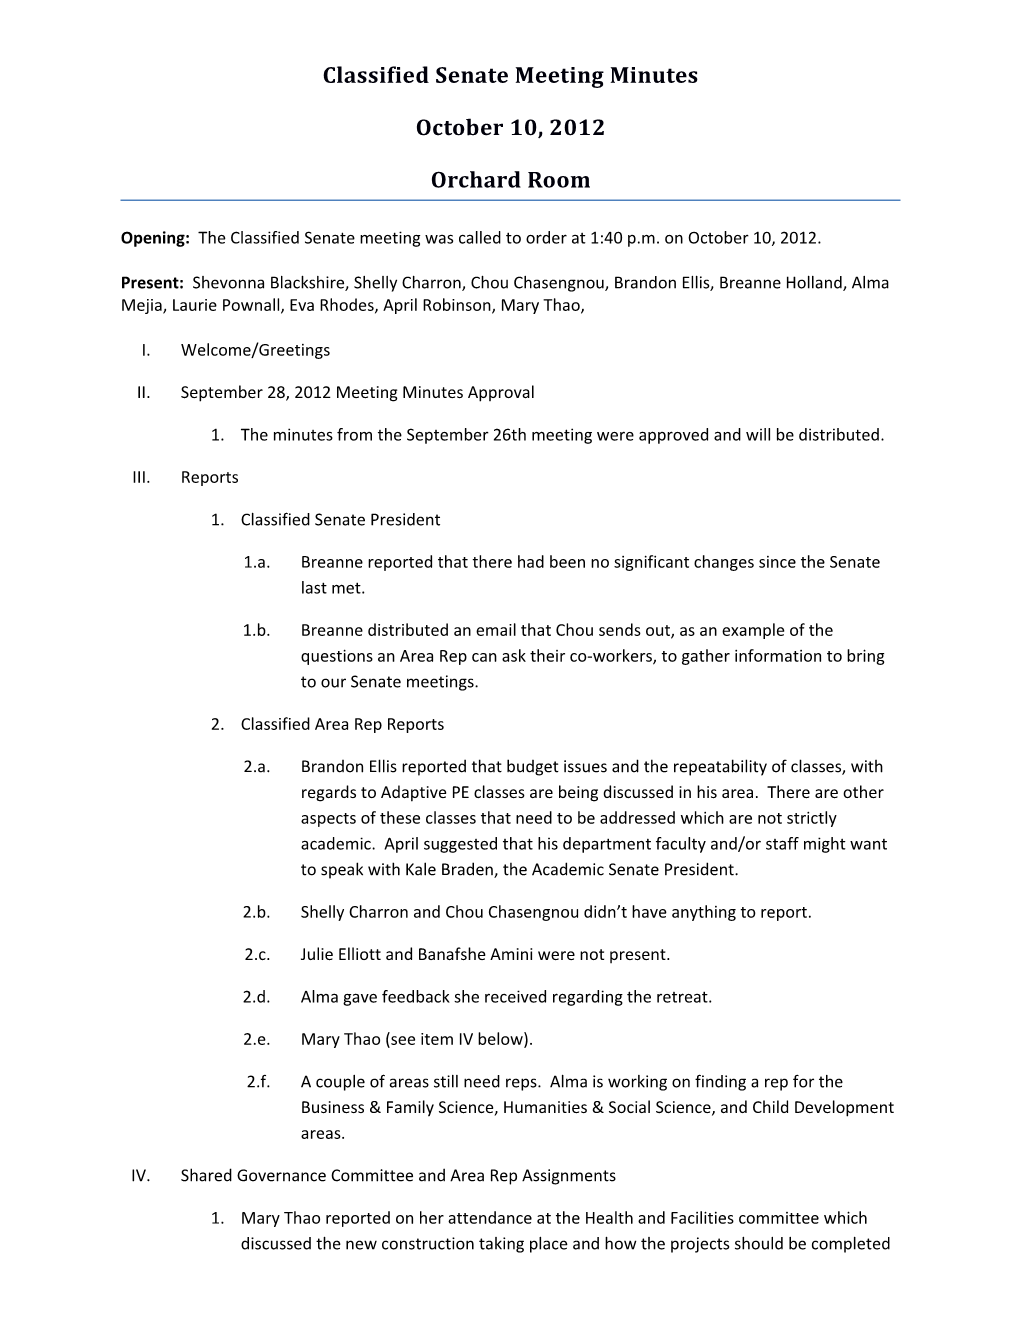 Classified Senate Meeting Minutes (10/10/12)